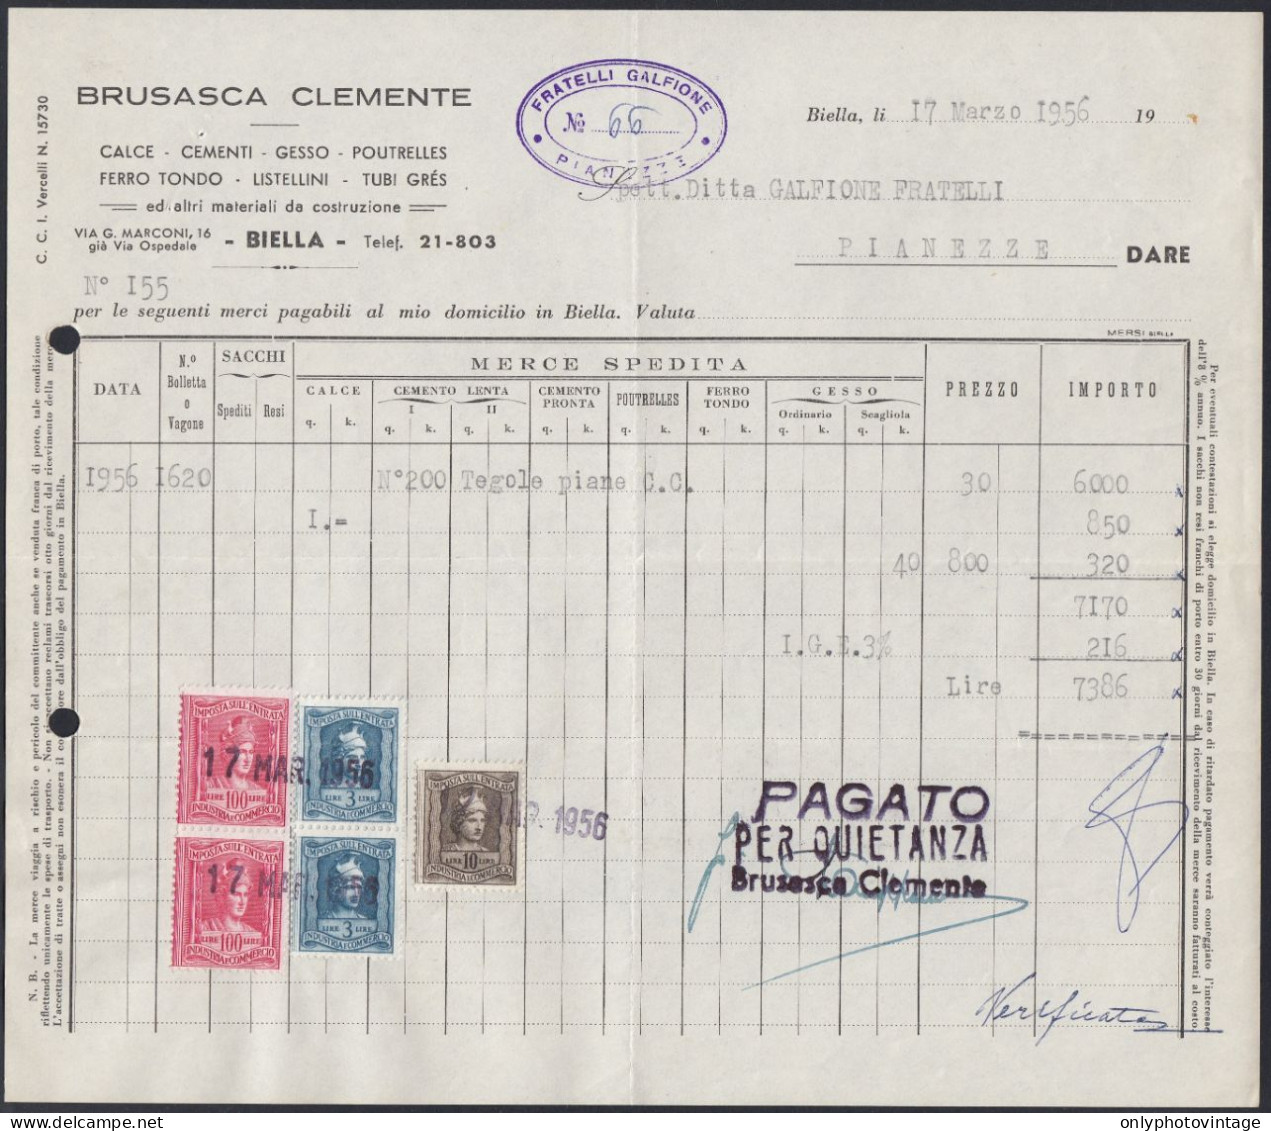 Biella 1956 - Brusasca Clemente - Materiale Da Costruzione - Fattura - Italia